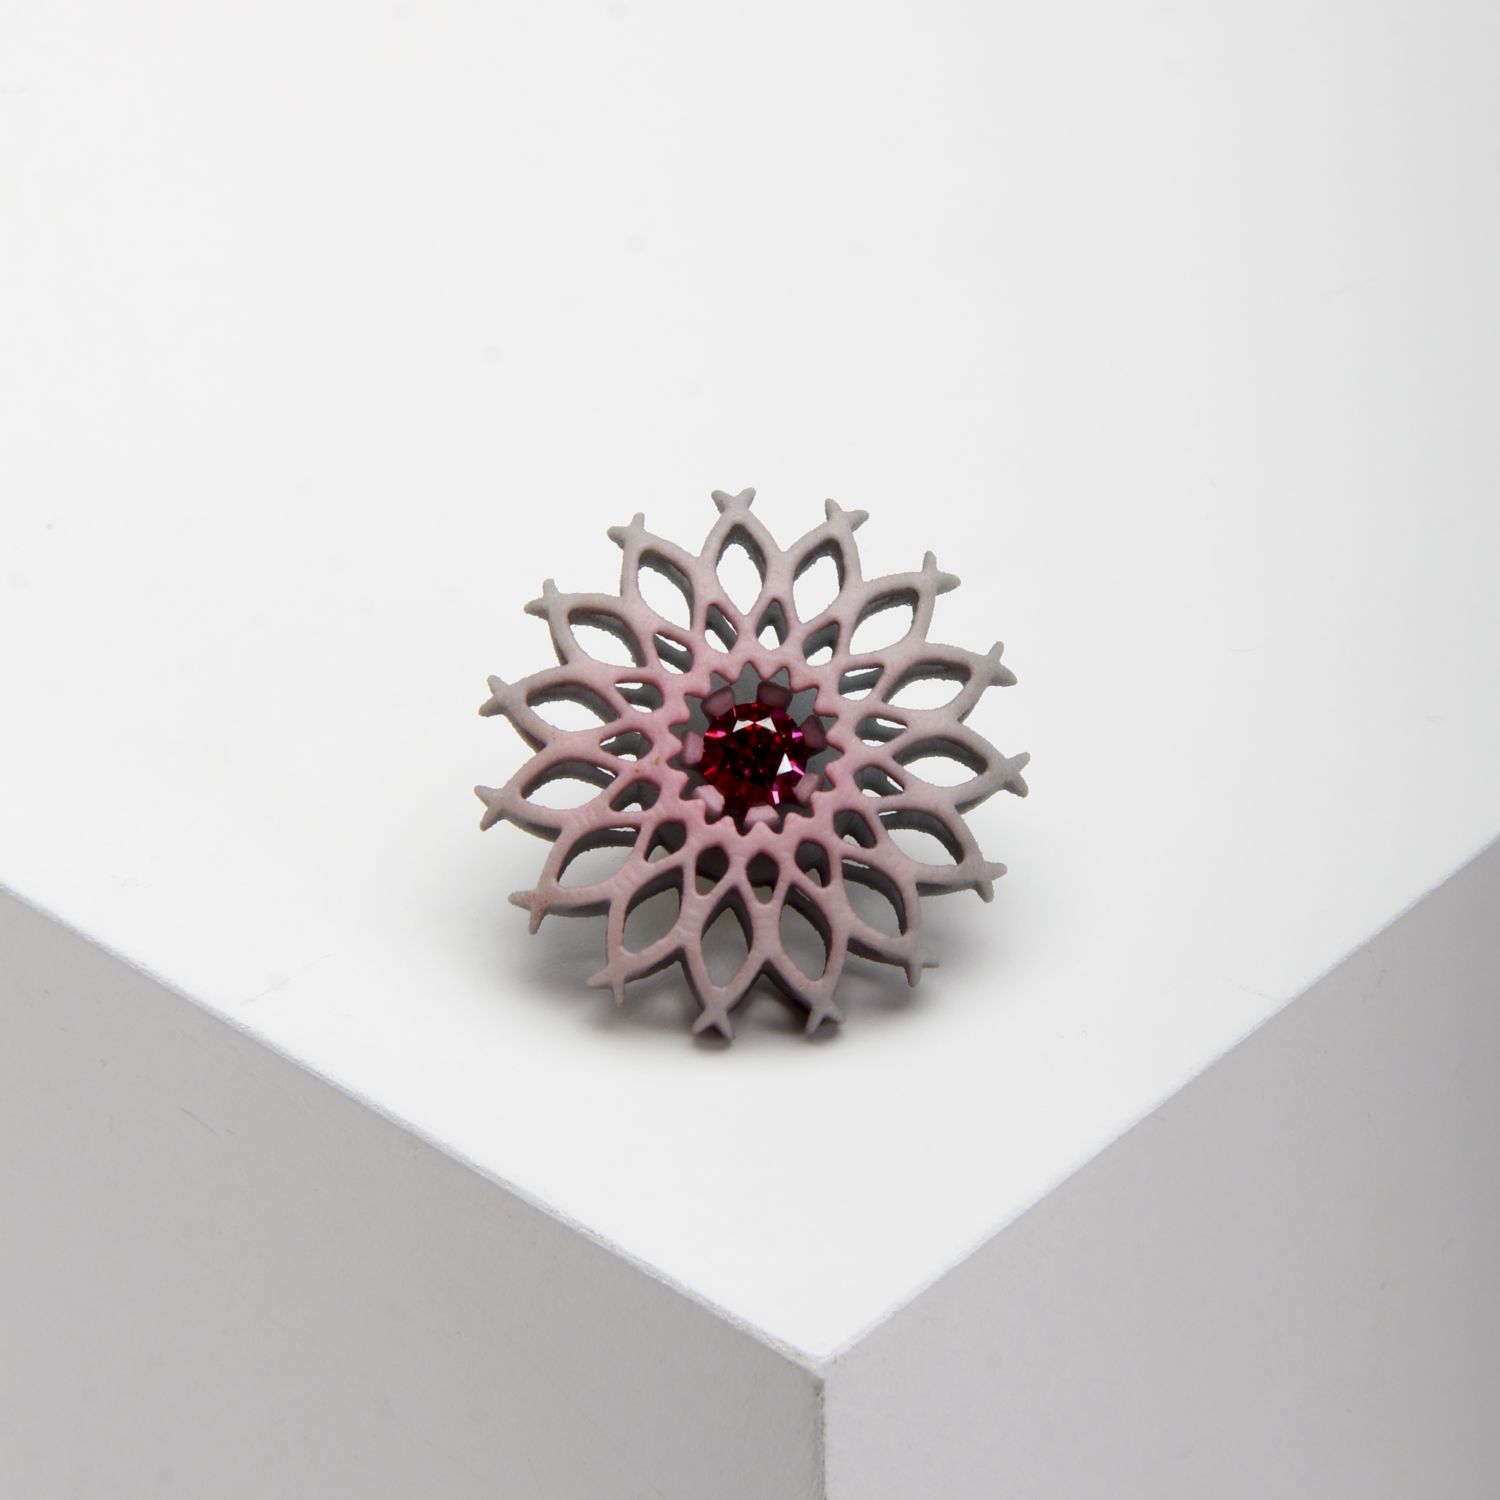 Kormar: Mandala Pin w Gemstone Product Image 2 of 3